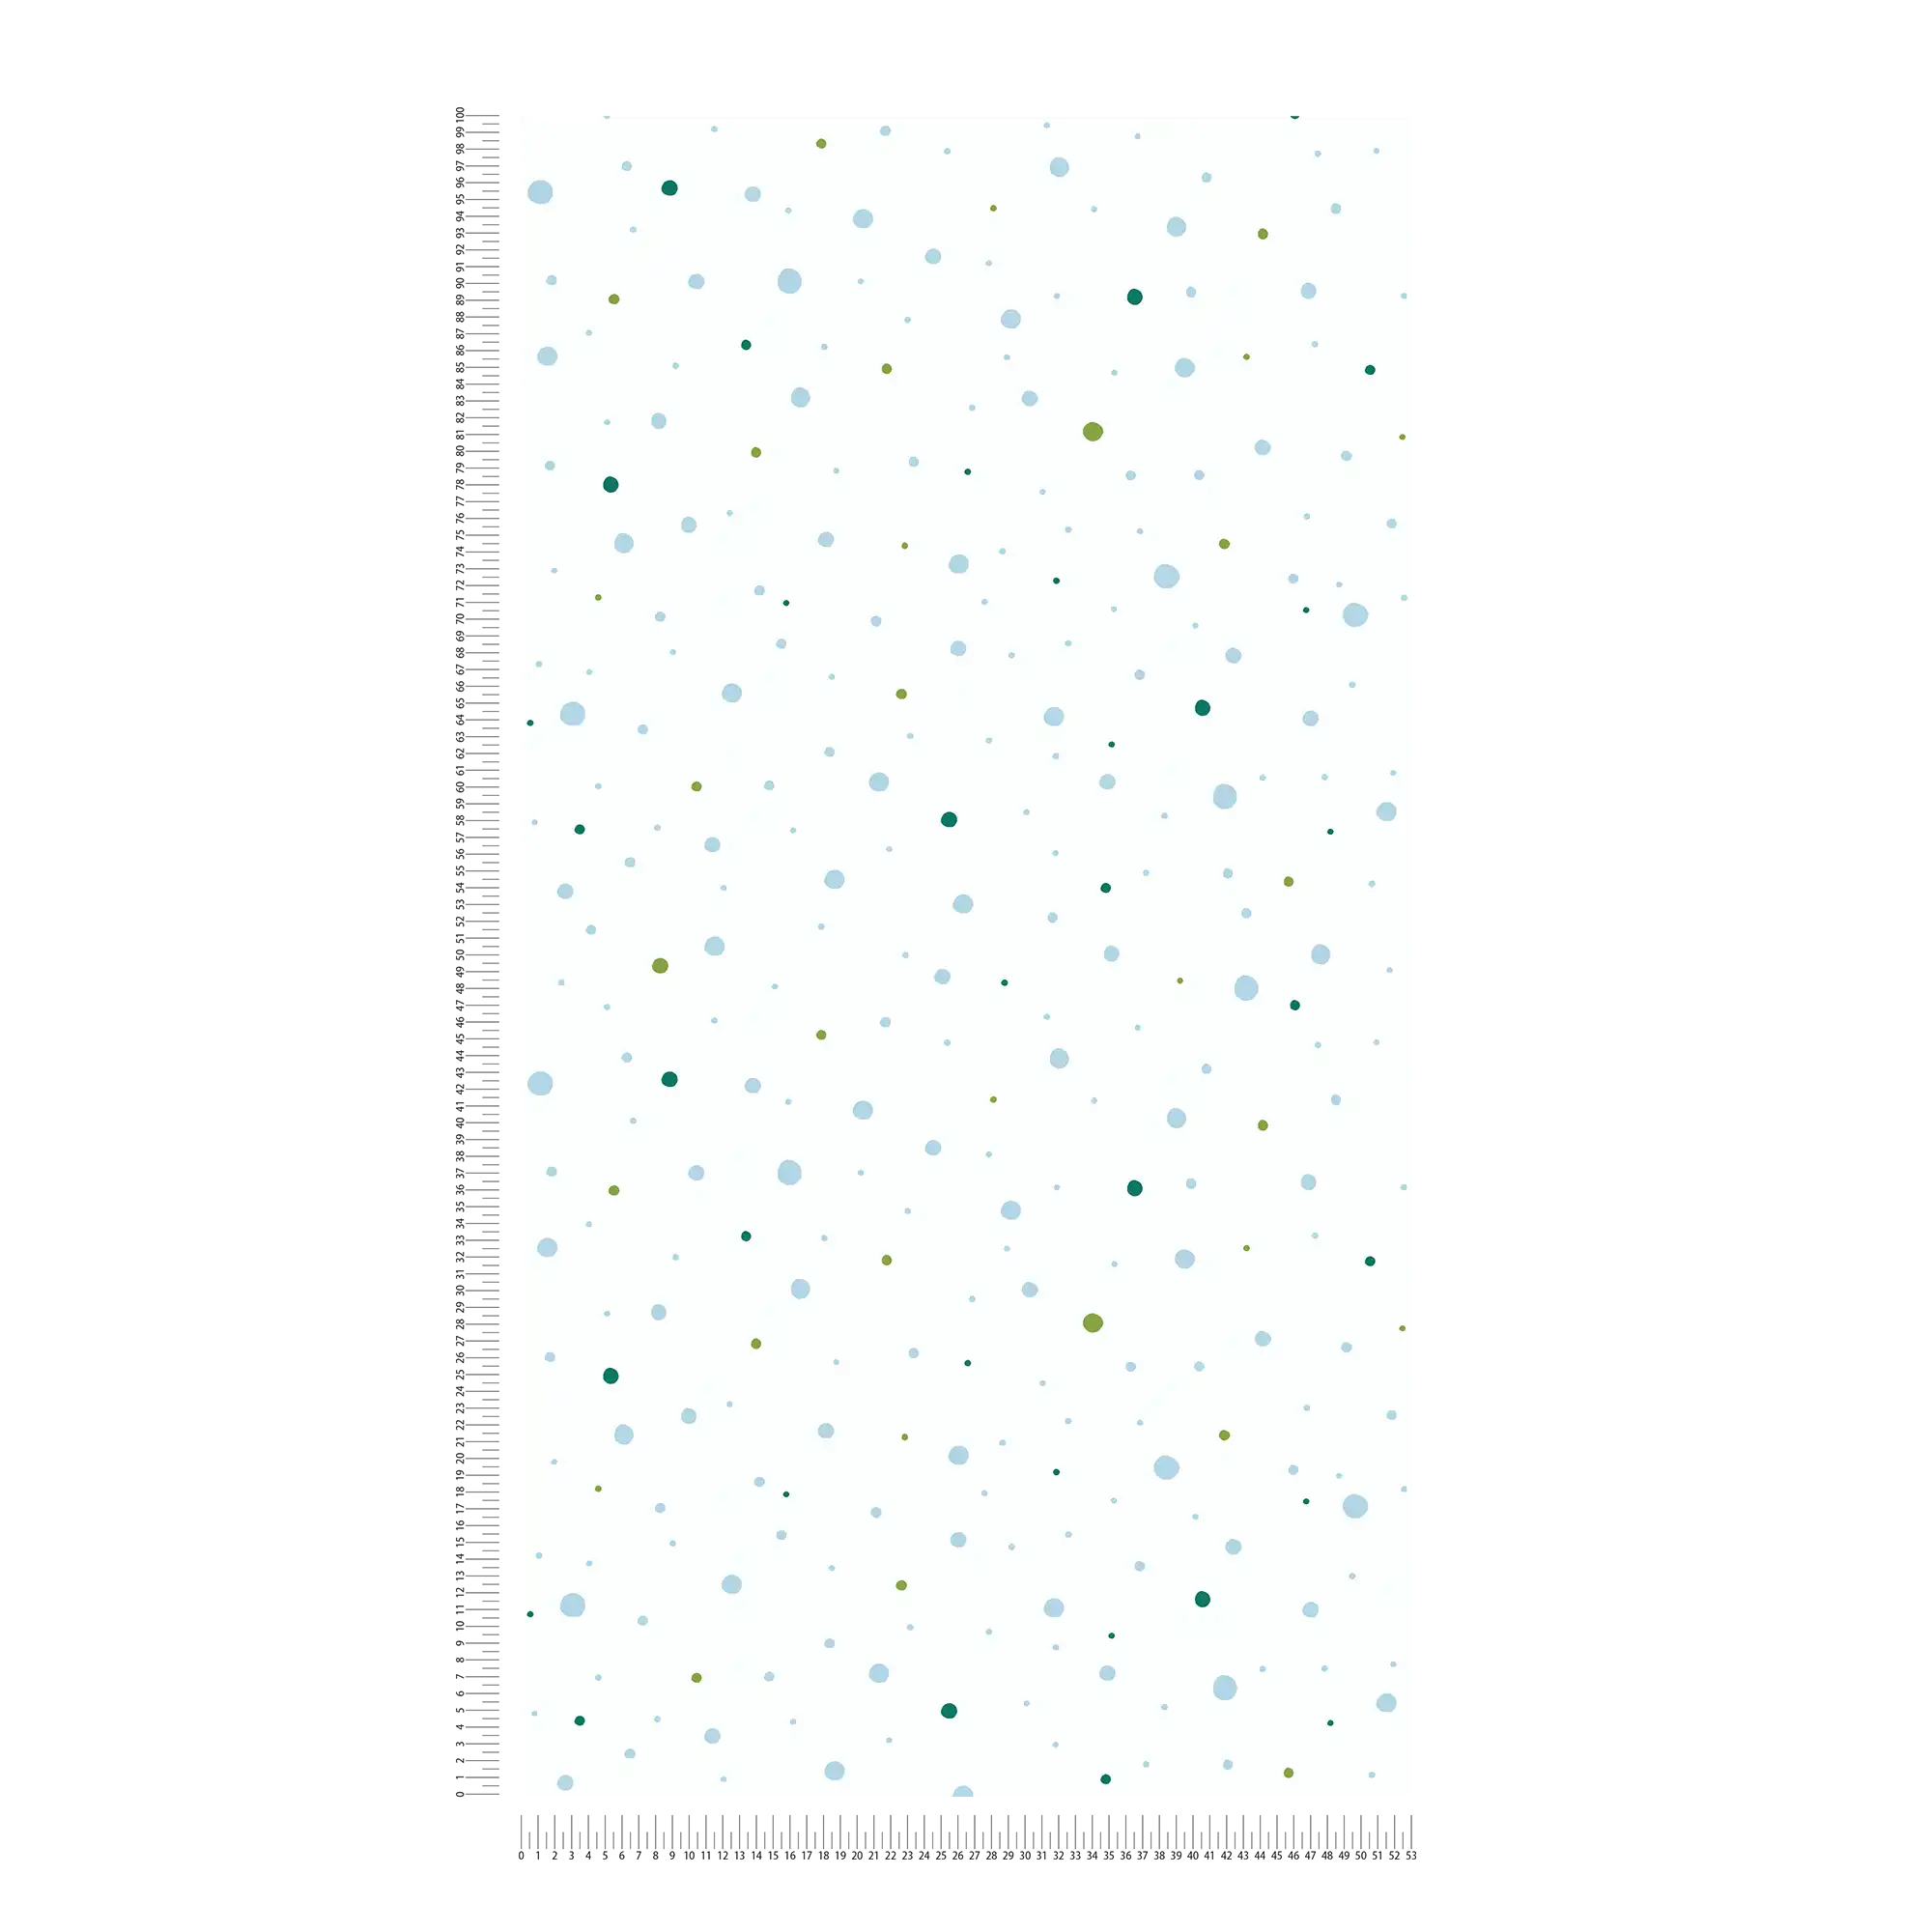             Nursery wallpaper dots - blue, white, green
        